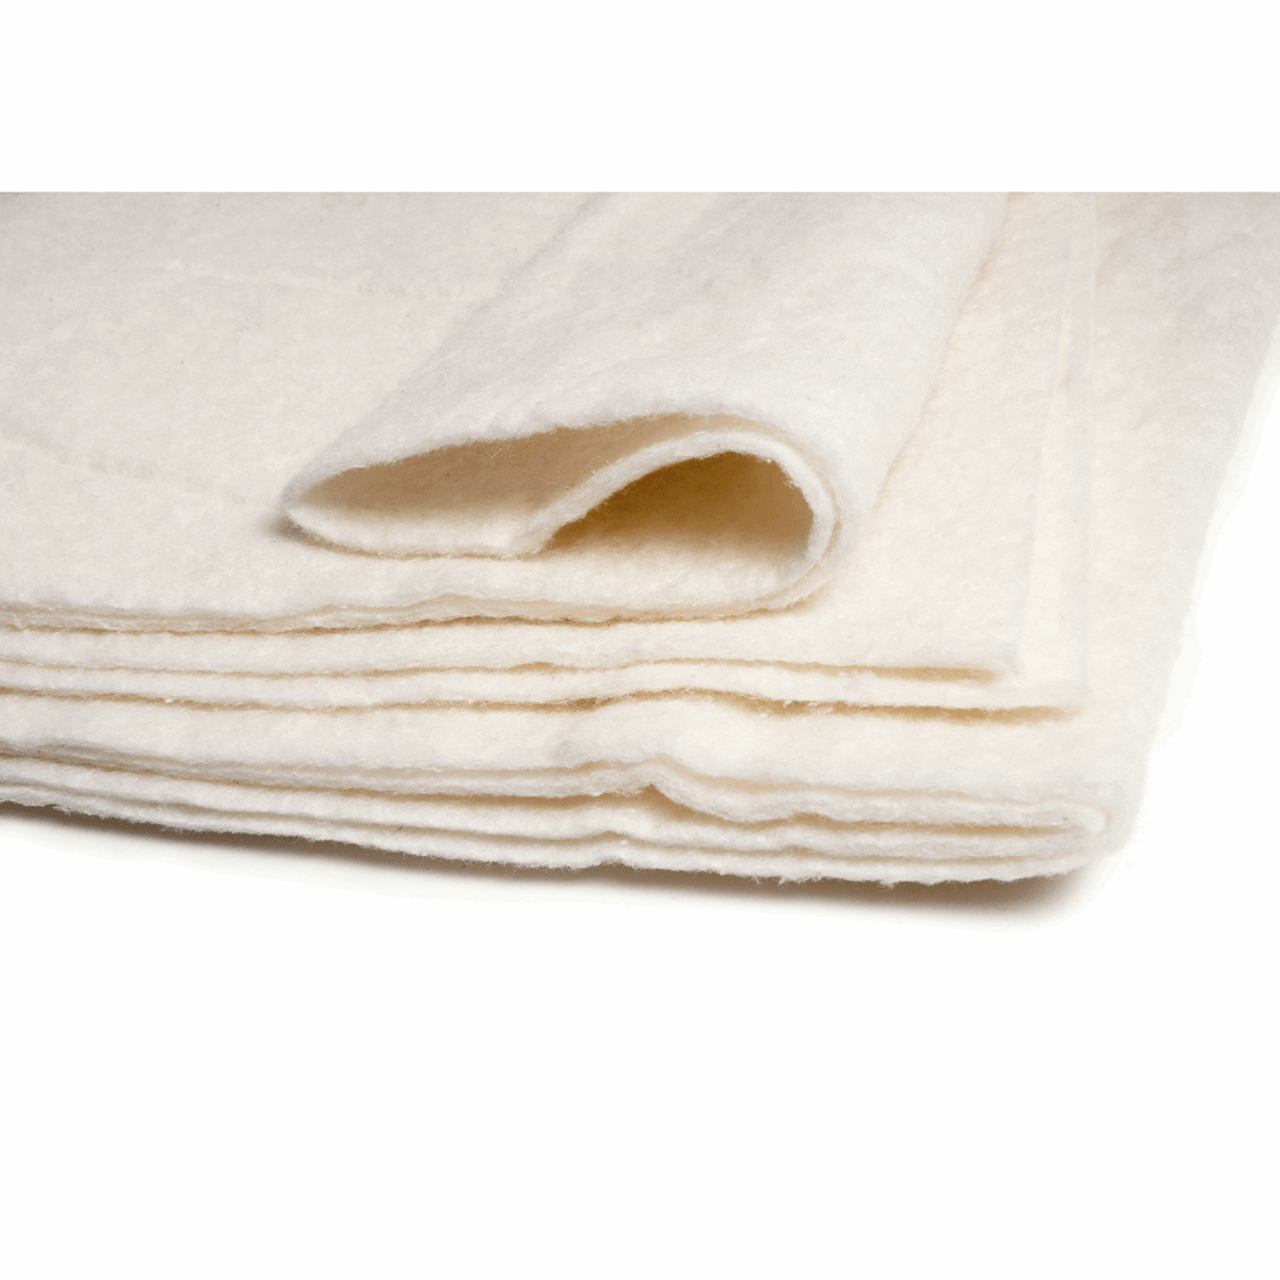 Wadding: 80% Cotton / 20% Polyester: Full: 205.7 x 243.8cm